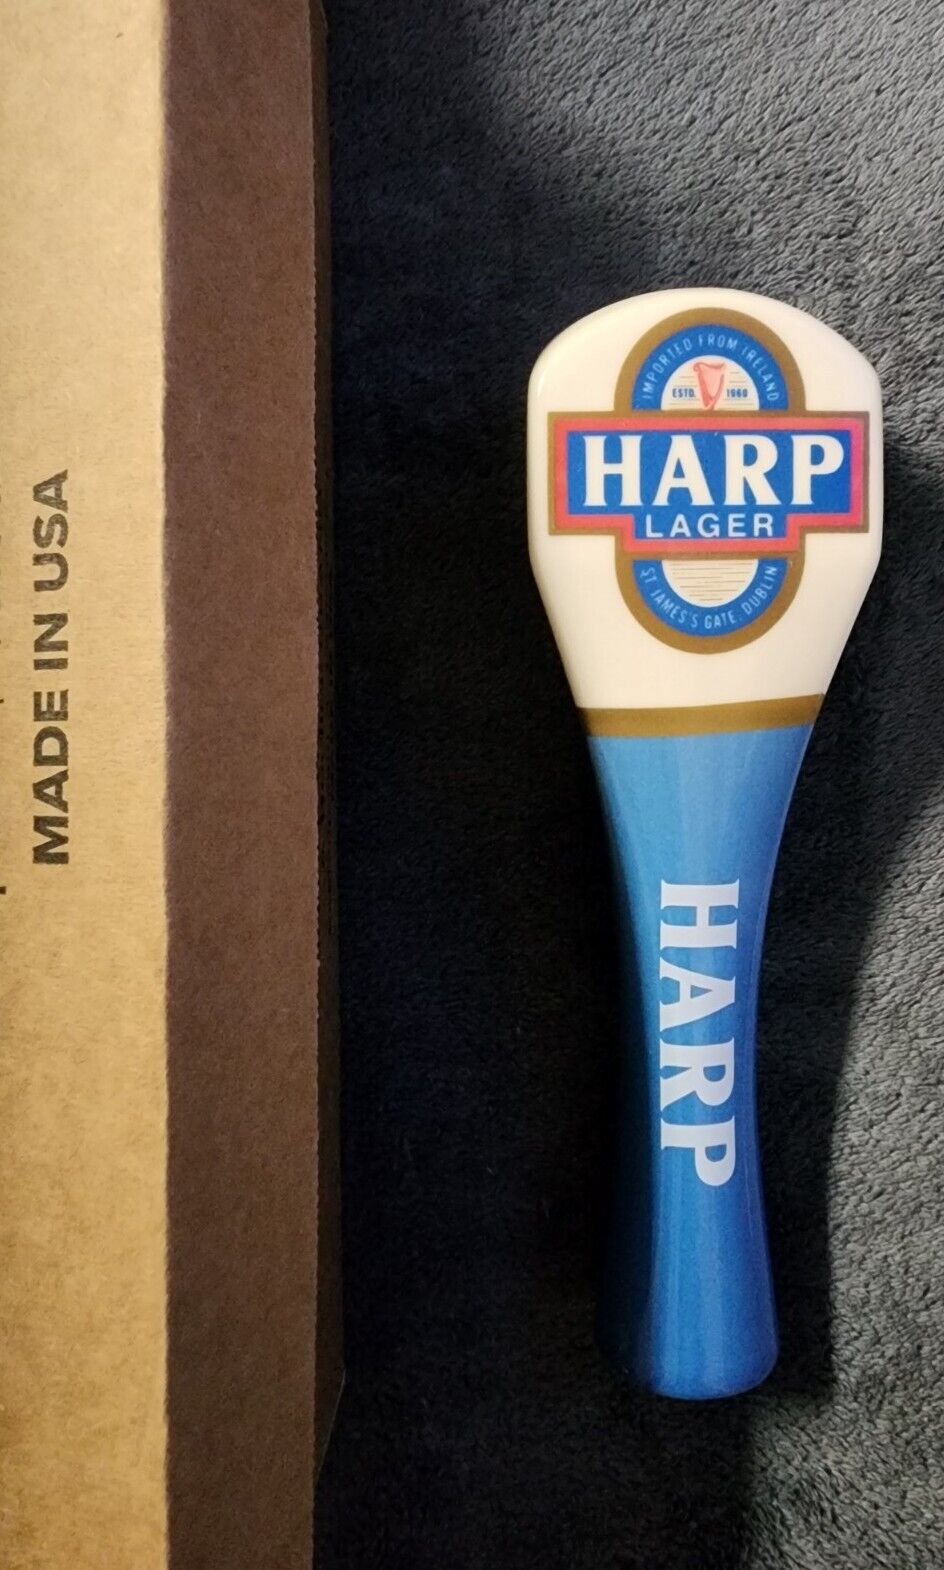 Harp Lager TAP HANDLE *BRAND NEW IN BOX* BAR. BEER. CERAMIC HANDLE. NEW DESIGN 